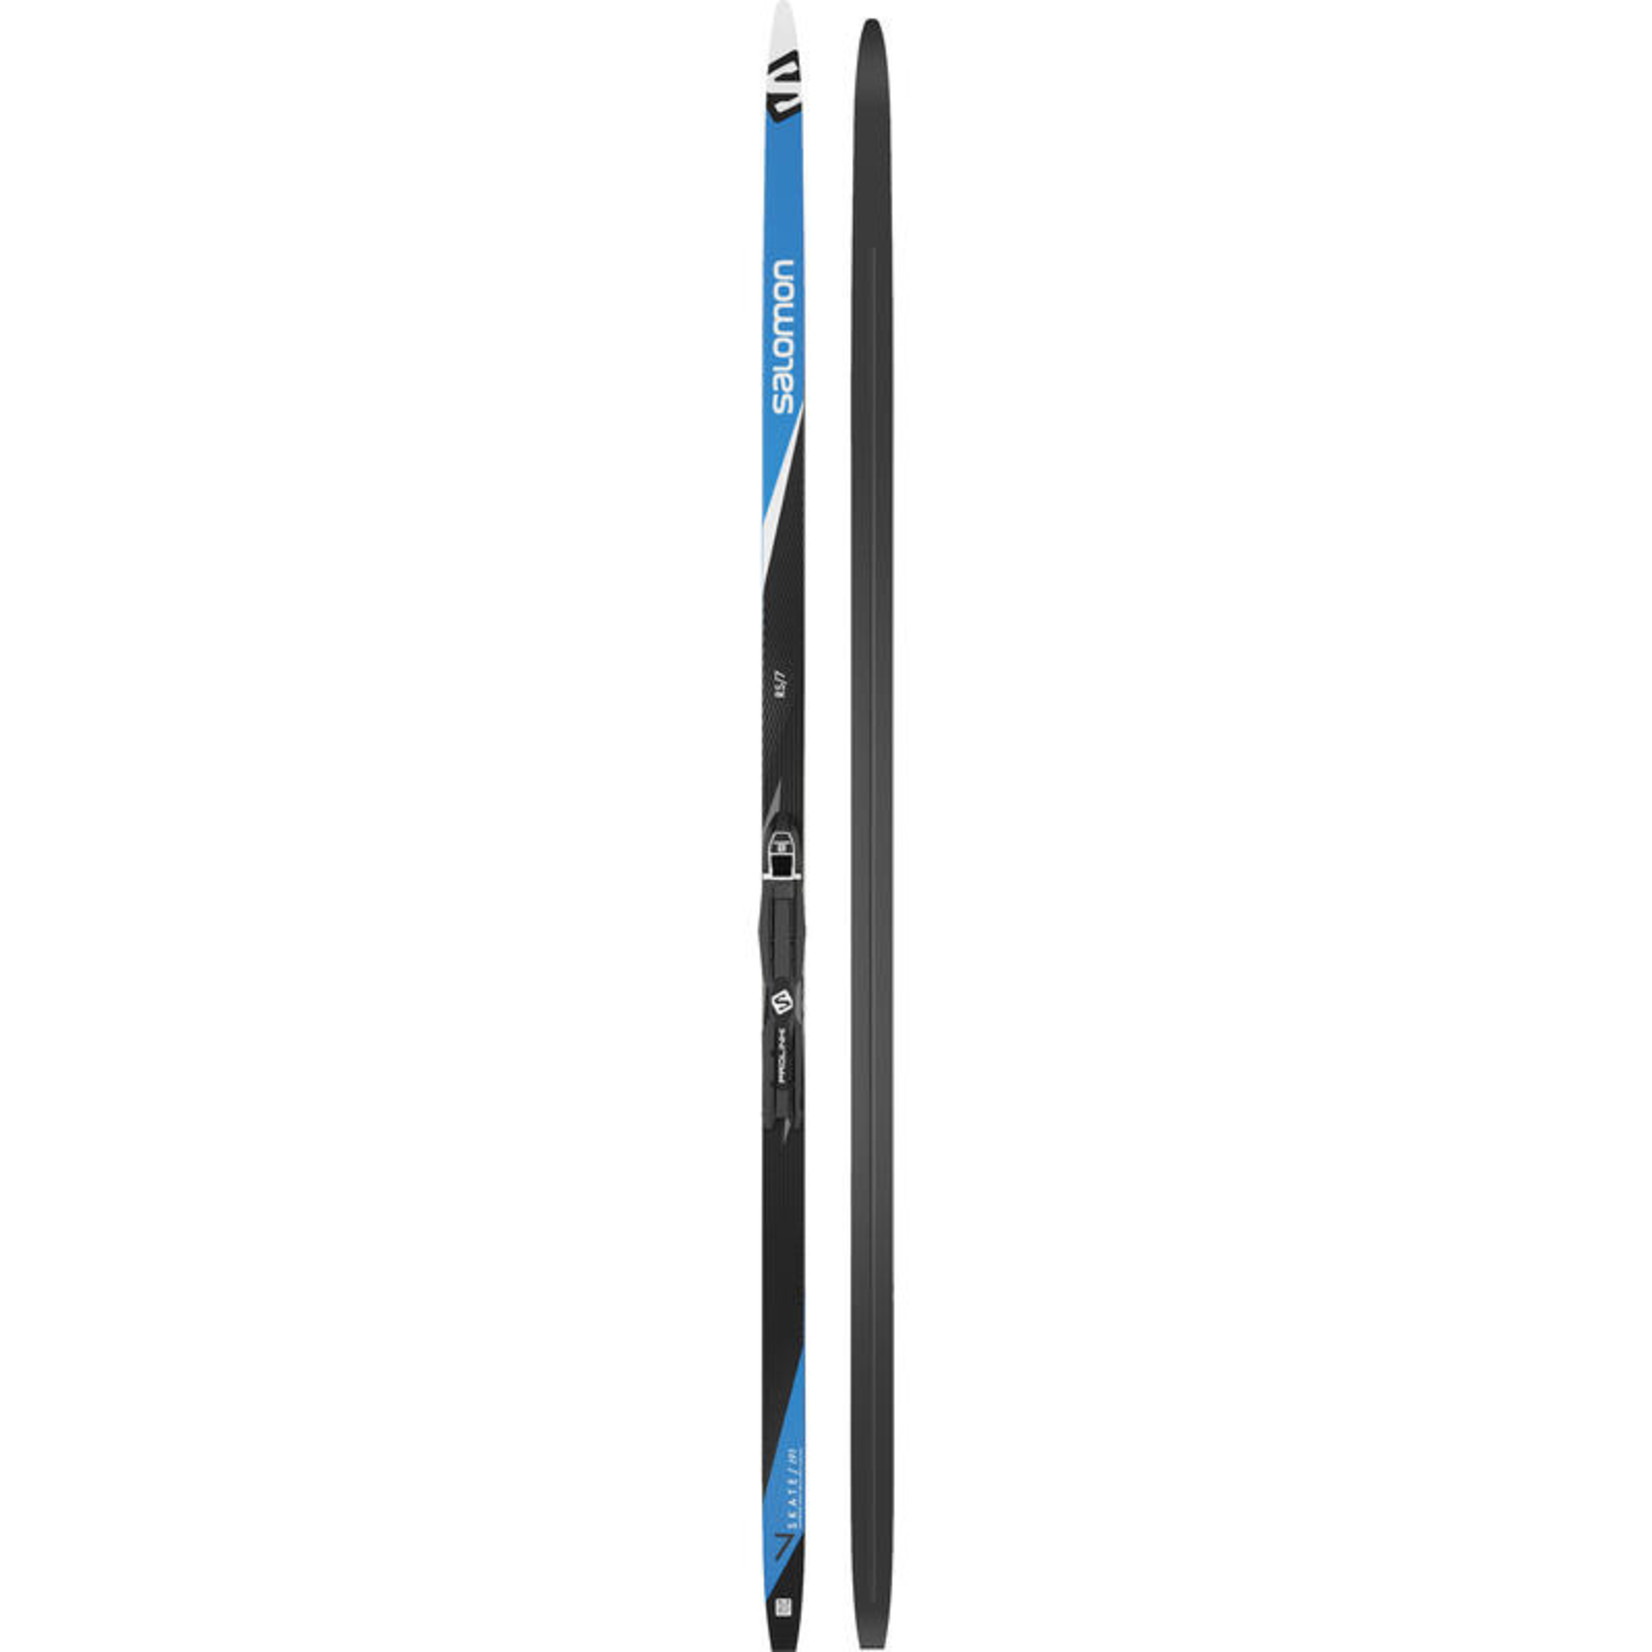 Salomon RS7 Skate Ski with Prolink Access Binding - 174